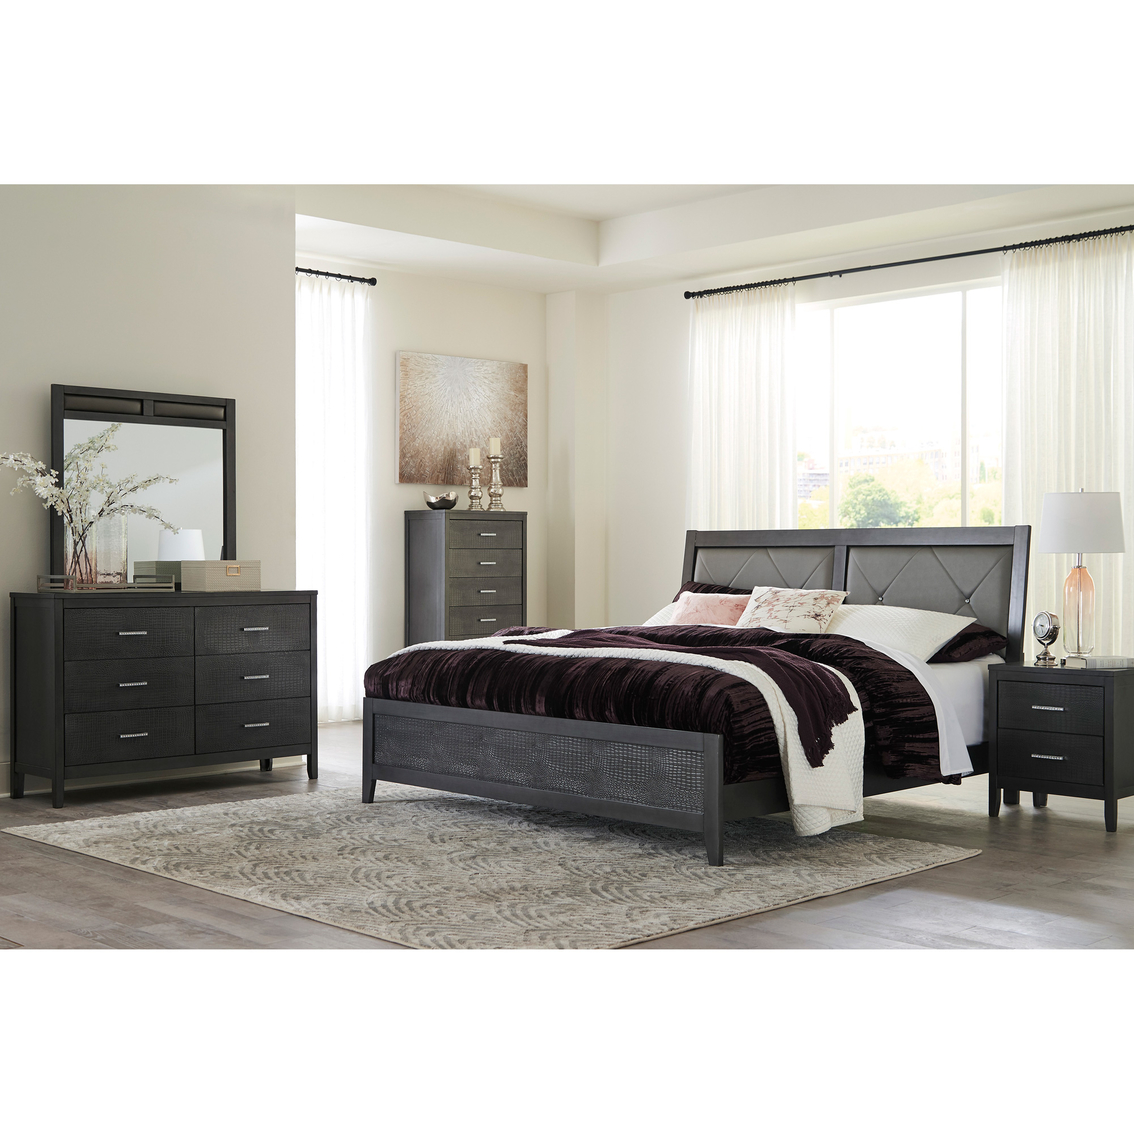 Benchcraft Delmar 5 Pc. Bedroom Set | Bedroom Sets | Furniture ...